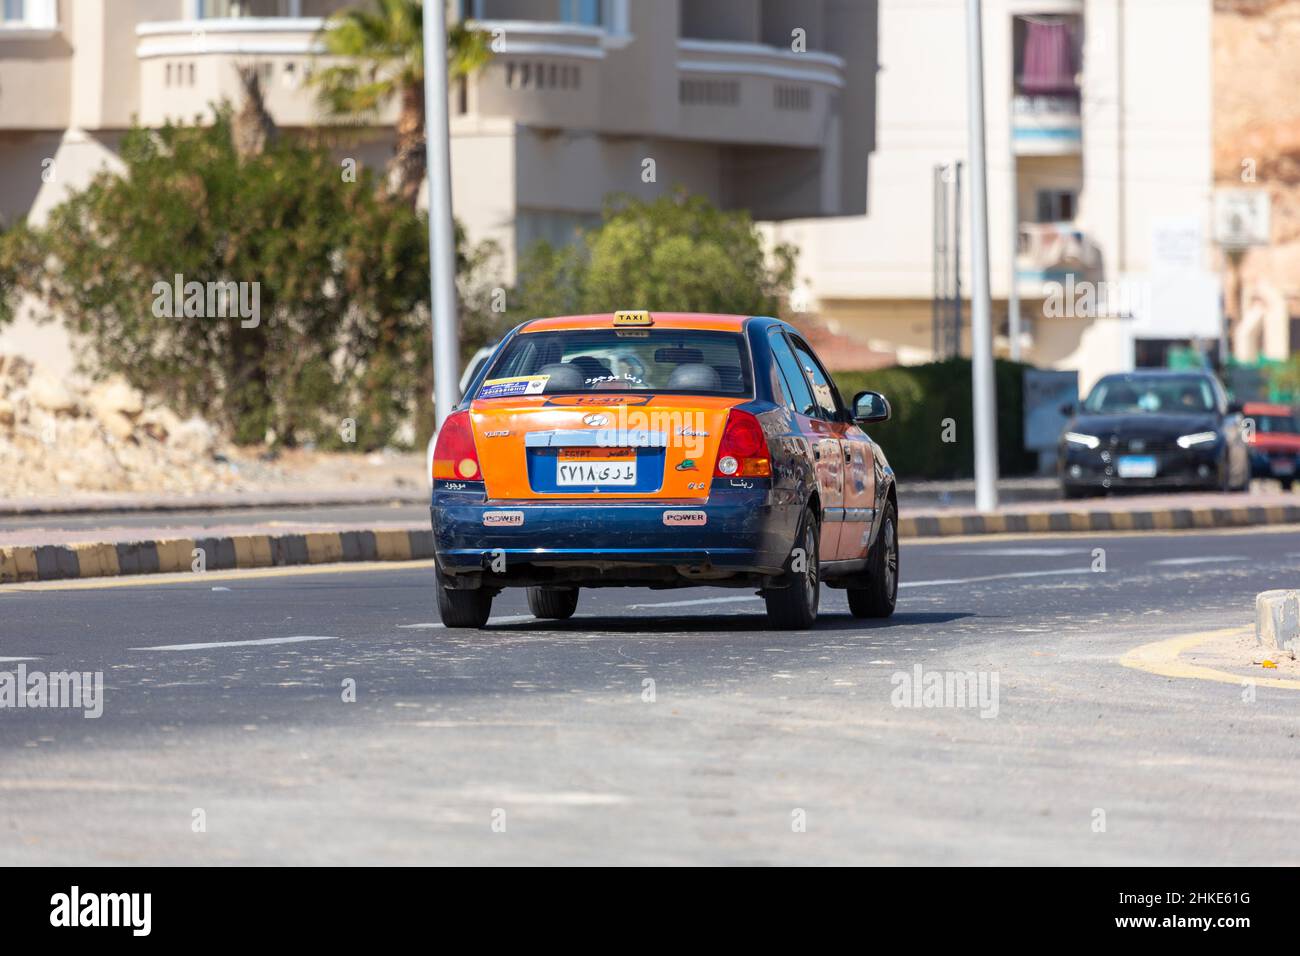 Hurghada, Egypt - January 30, 2022: Taxi cab drives on a street in Hurghada, Egypt. Stock Photo